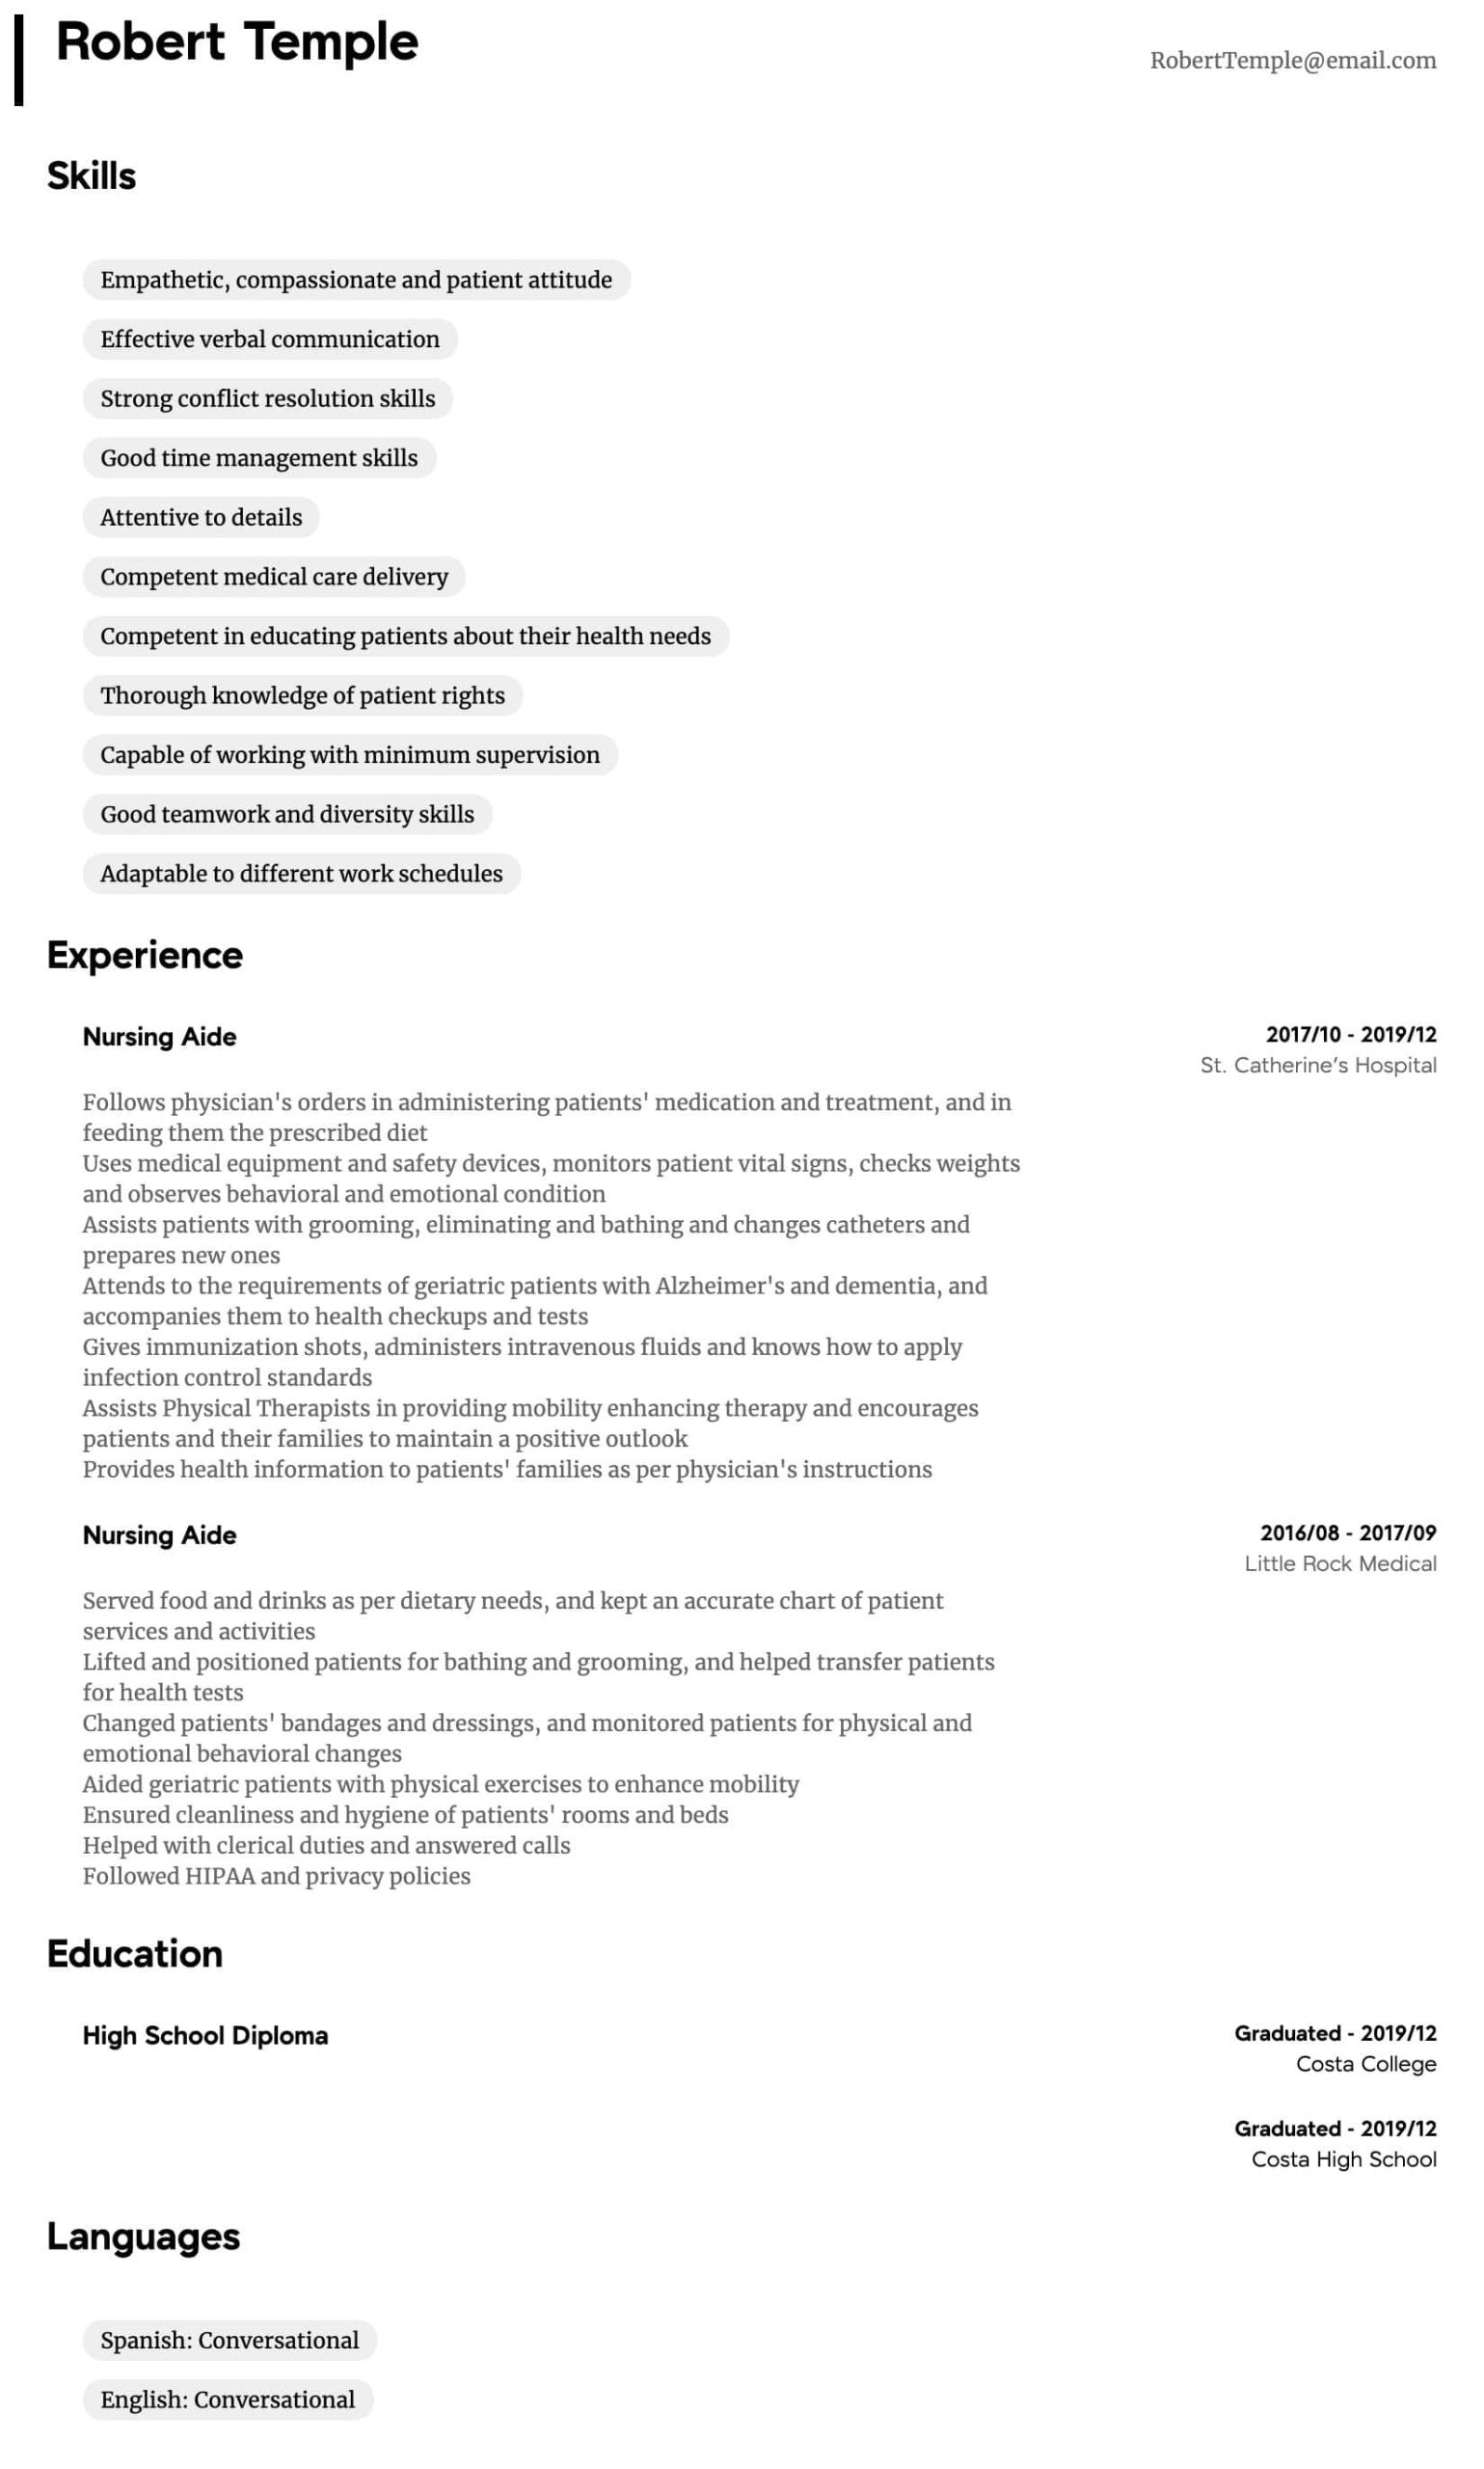 Sample Resume Objectives for Nursing Aide Nursing Aide Resume Samples All Experience Levels Resume.com …